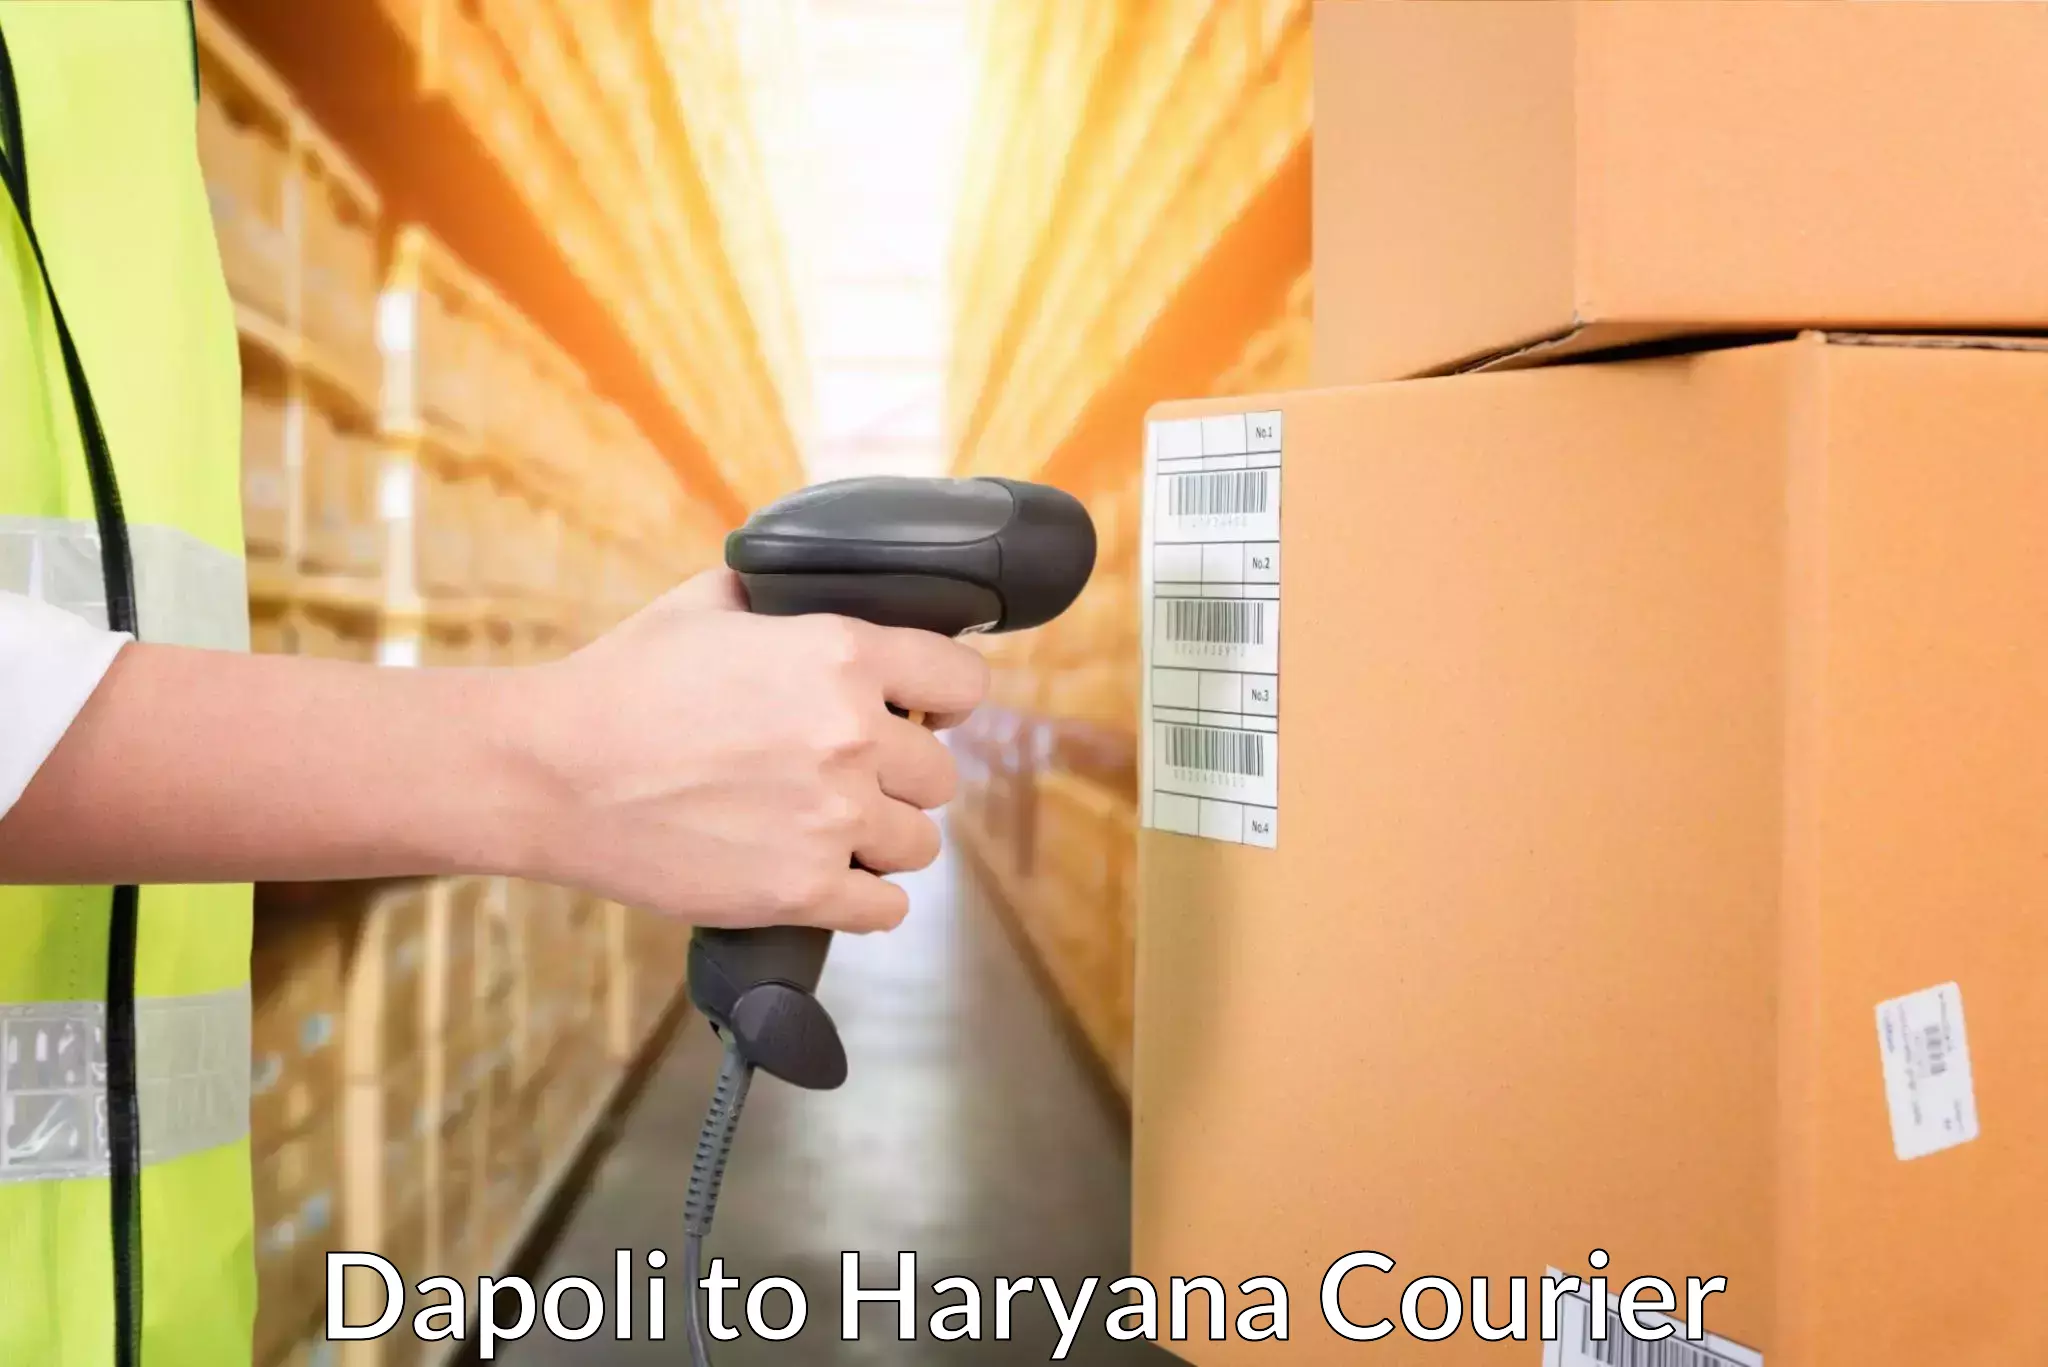 Global courier networks Dapoli to Haryana